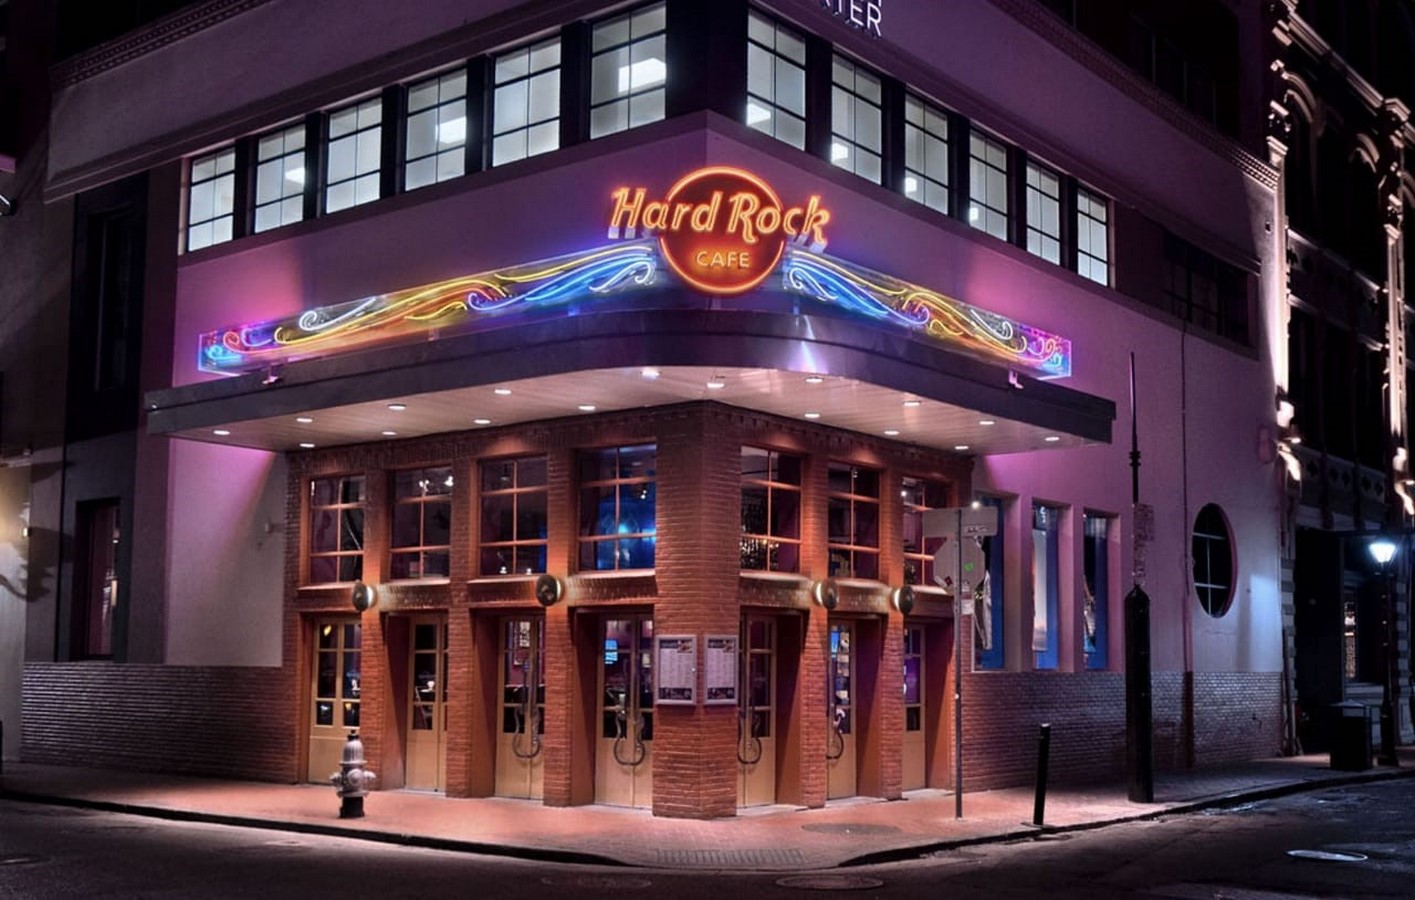 HARD ROCK CAFÉ, NEW ORLEANS